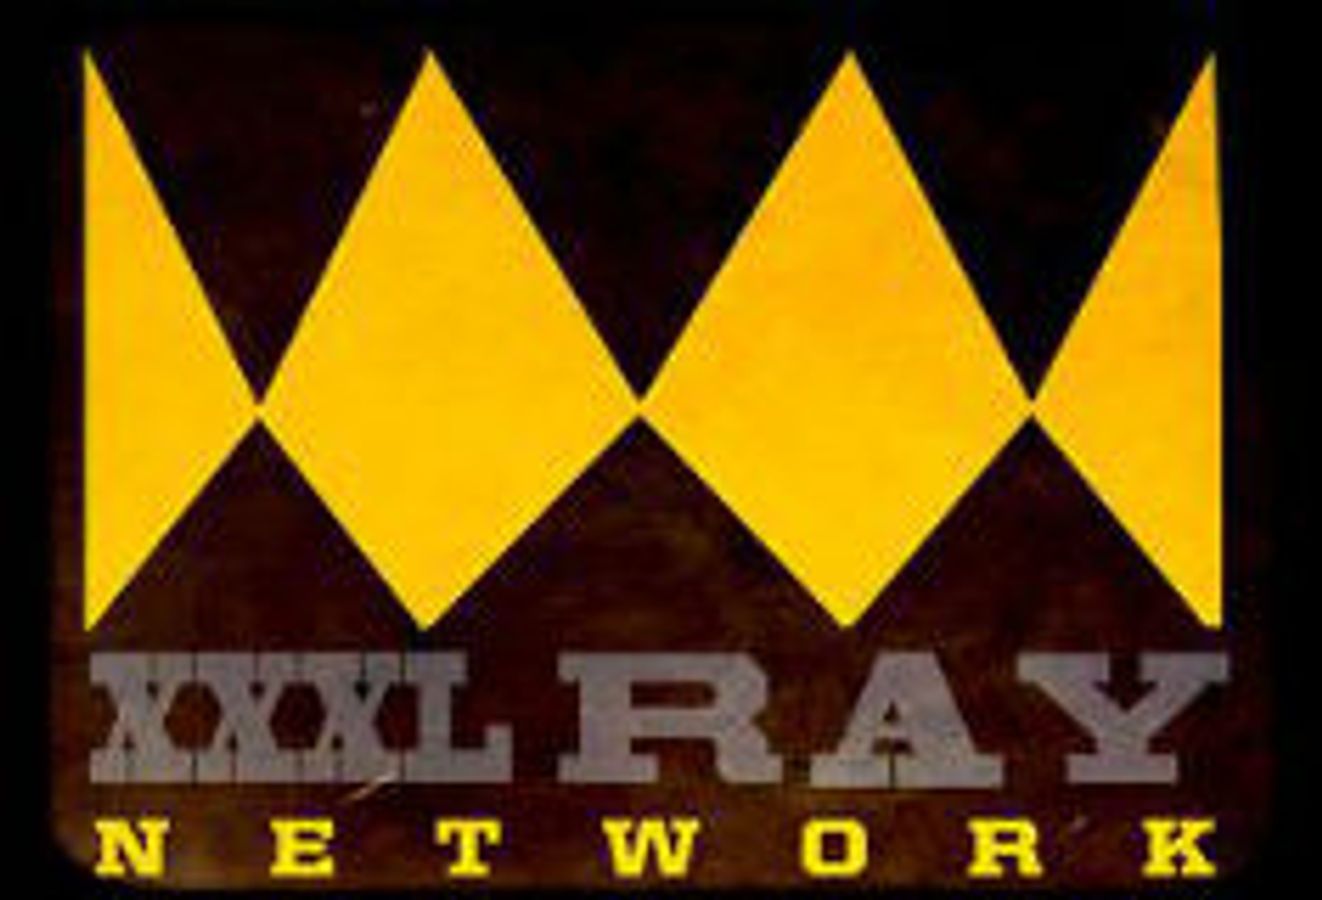 The XXXL Ray Network